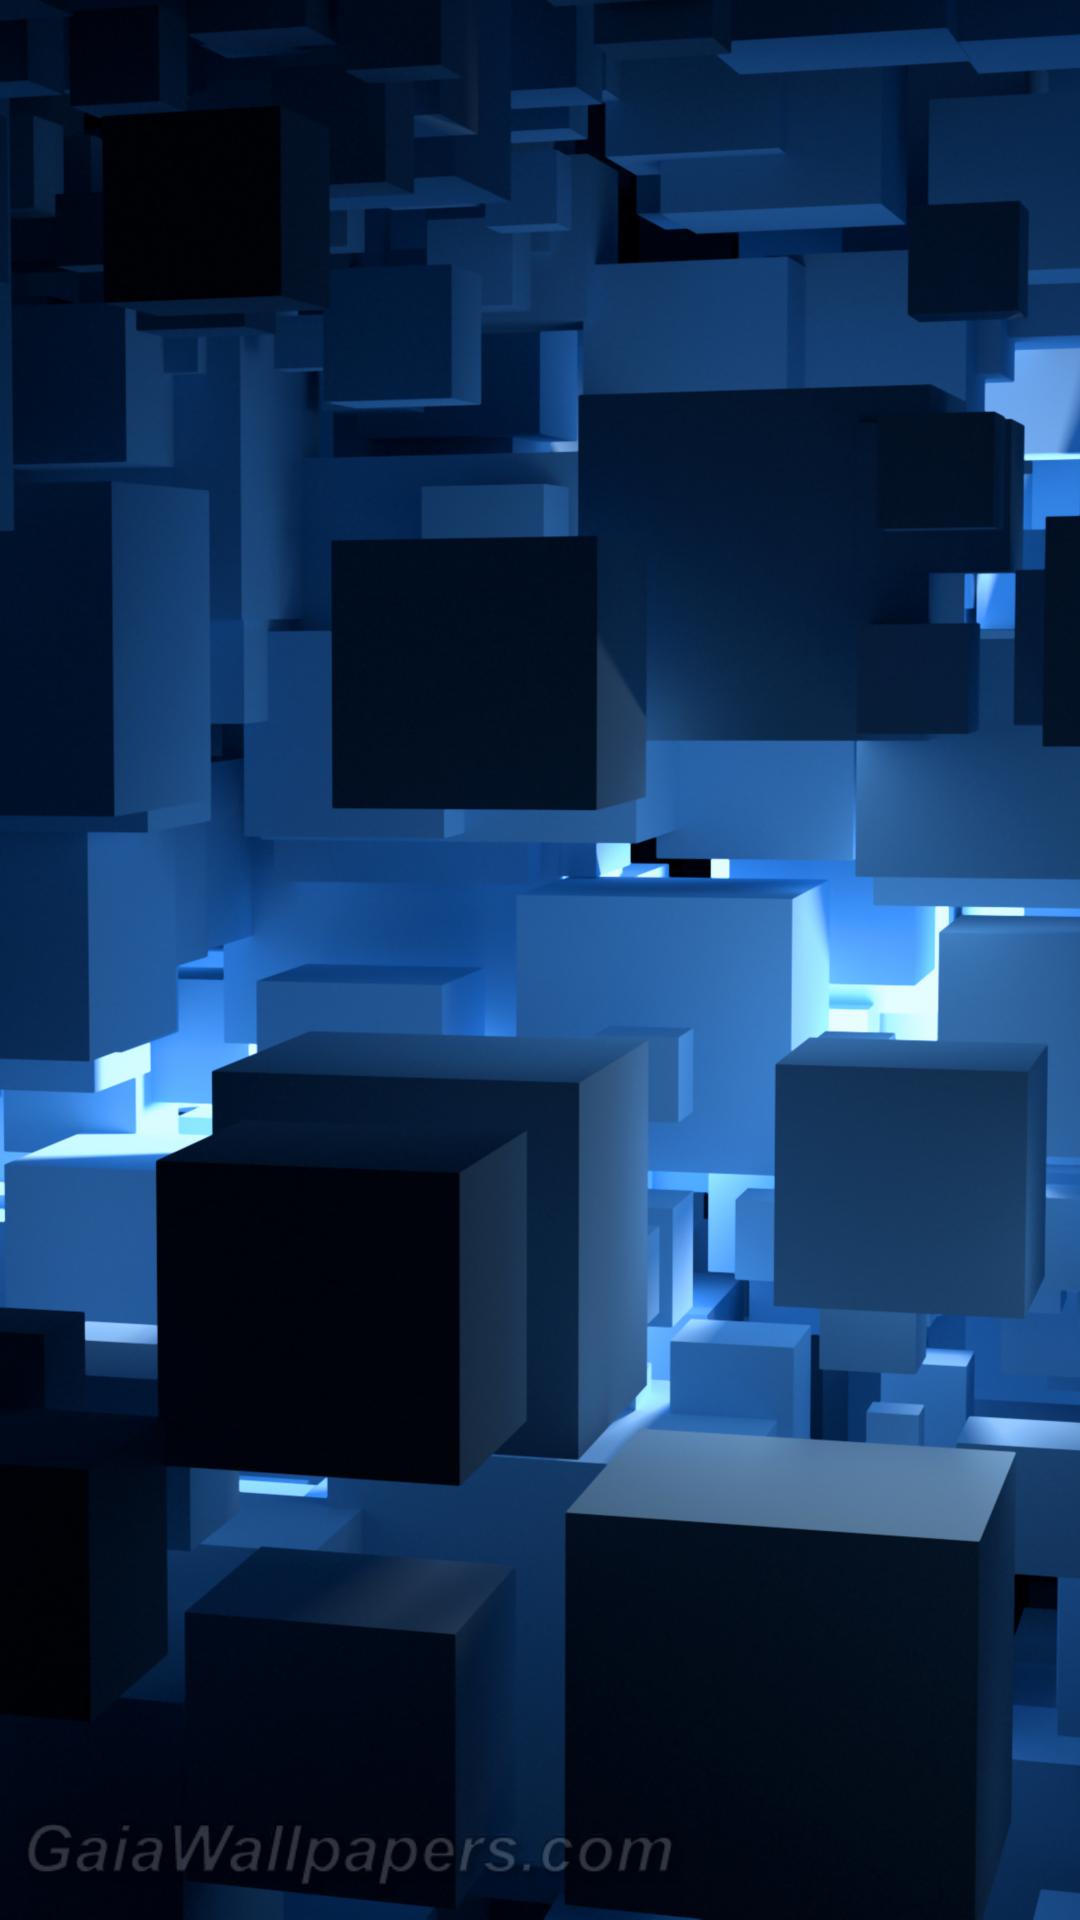 Virtual world of blue cubes - Free desktop wallpapers